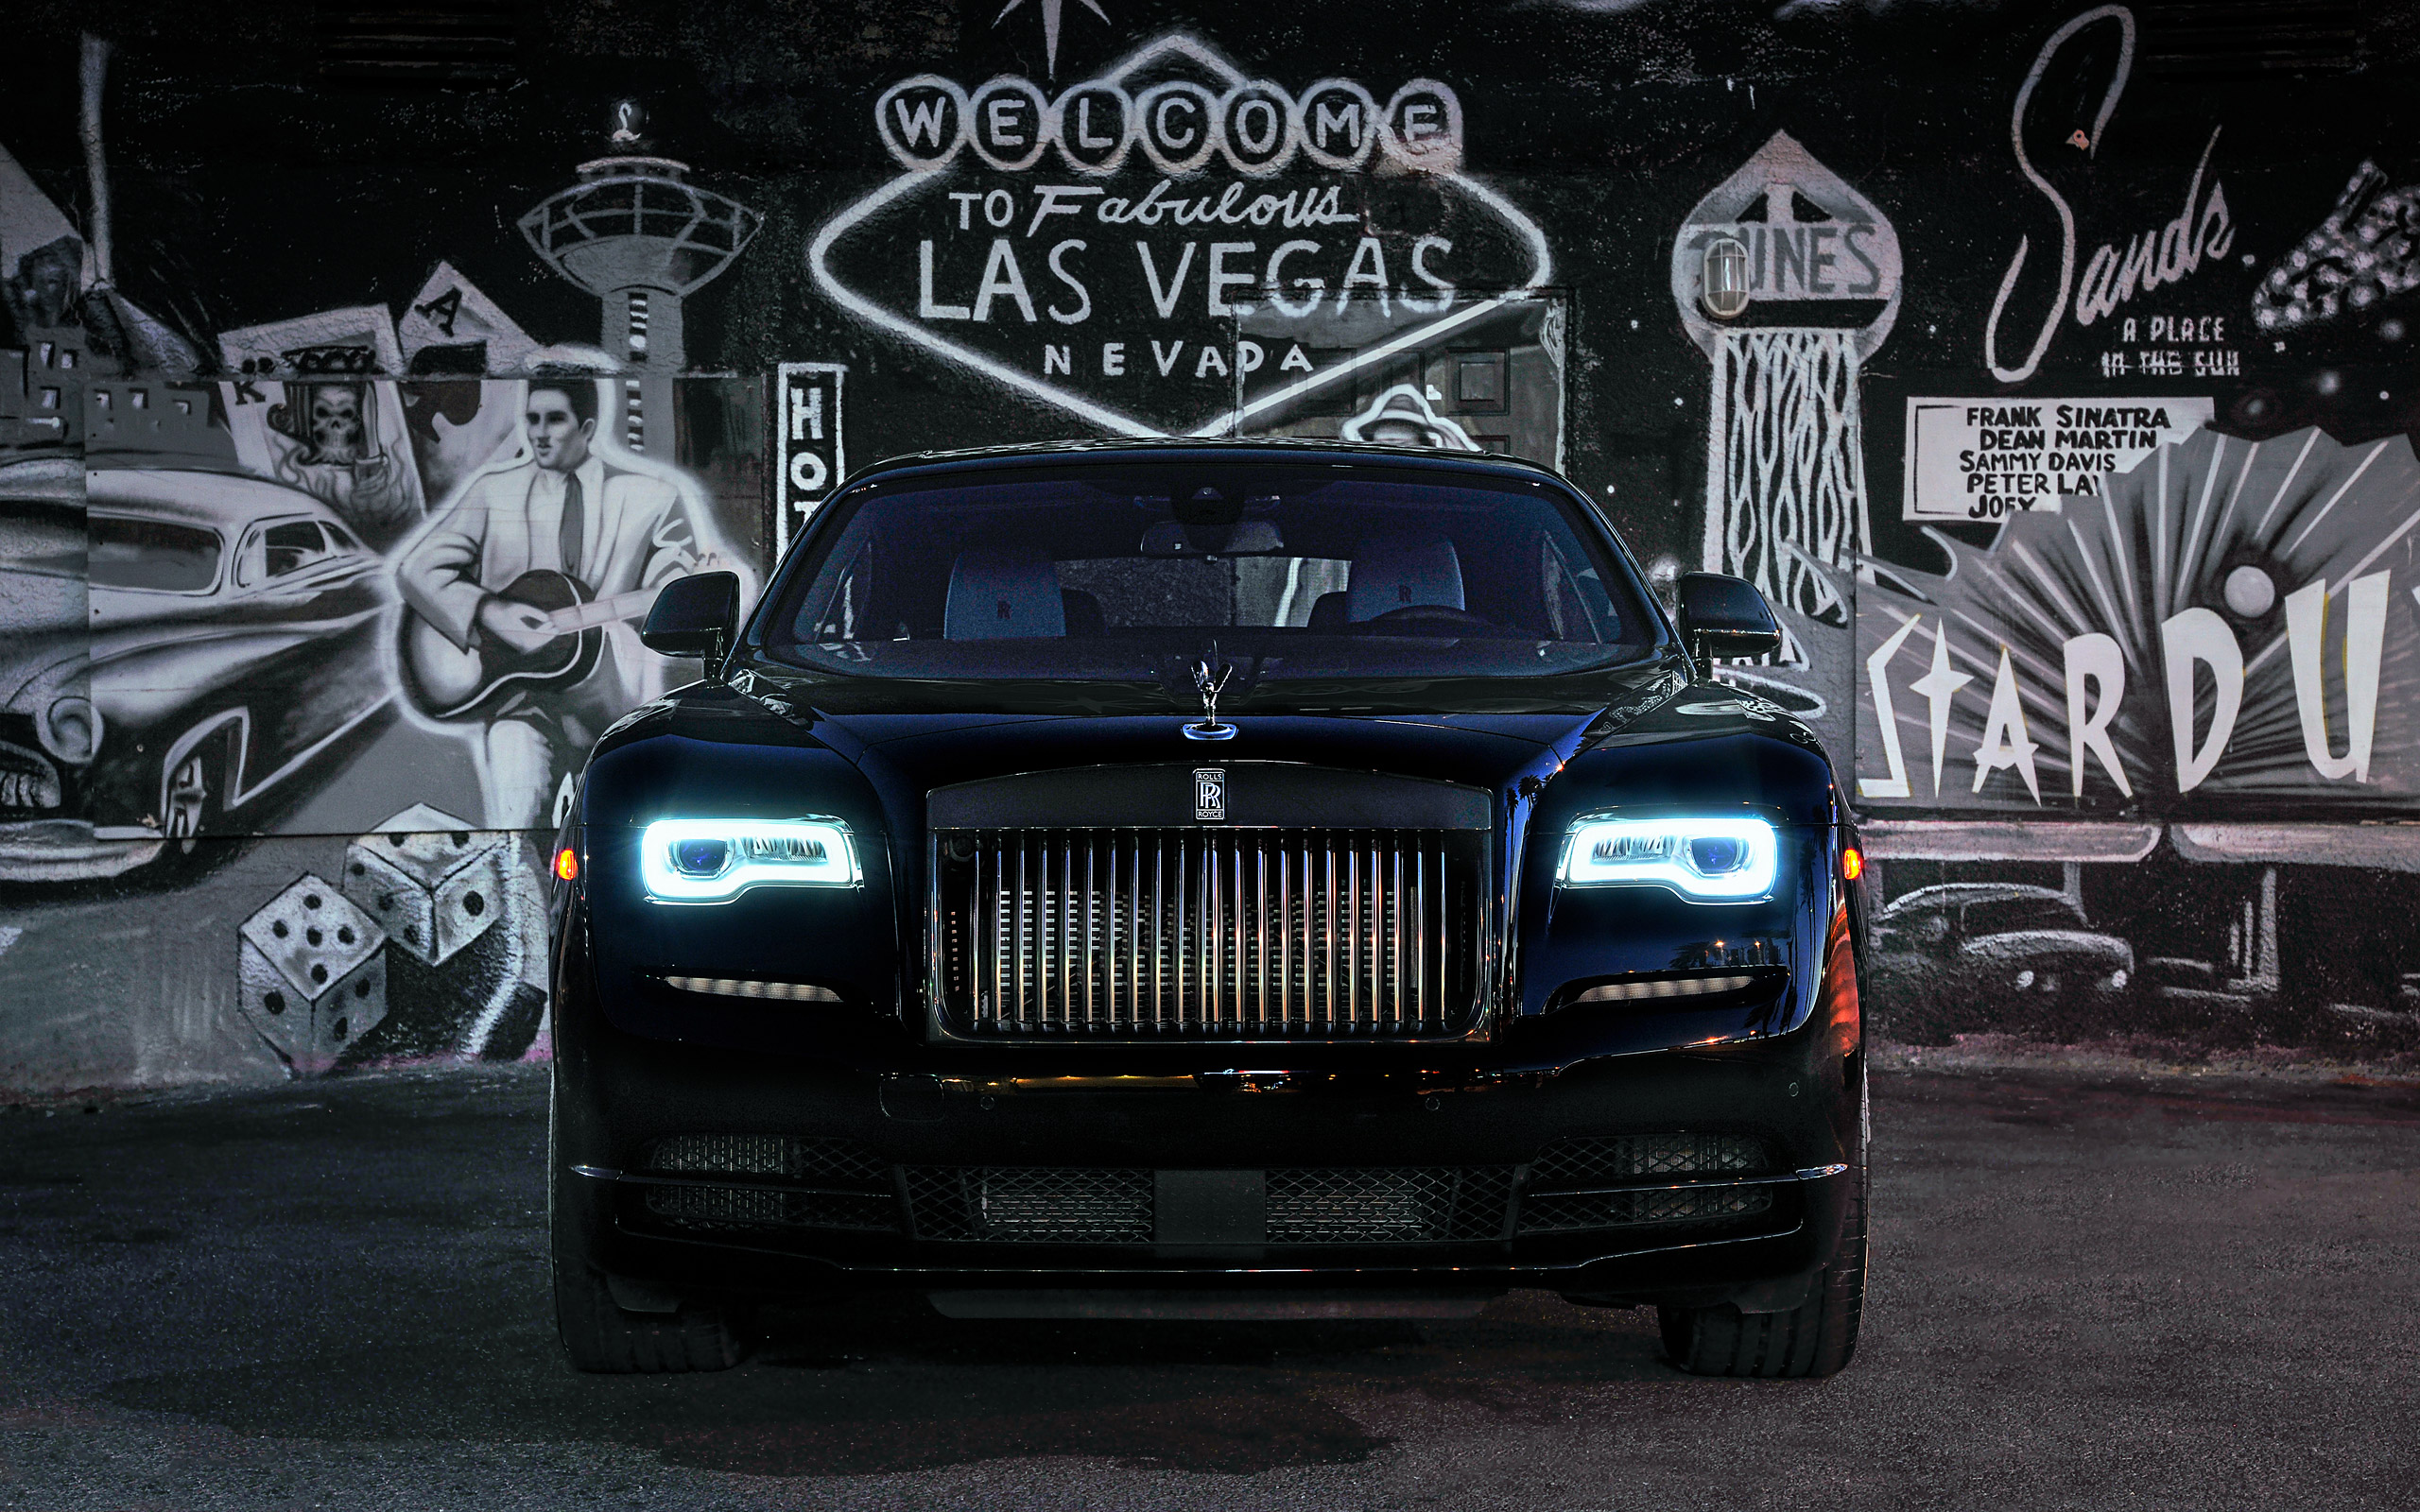  2017 Rolls-Royce Wraith Wallpaper.